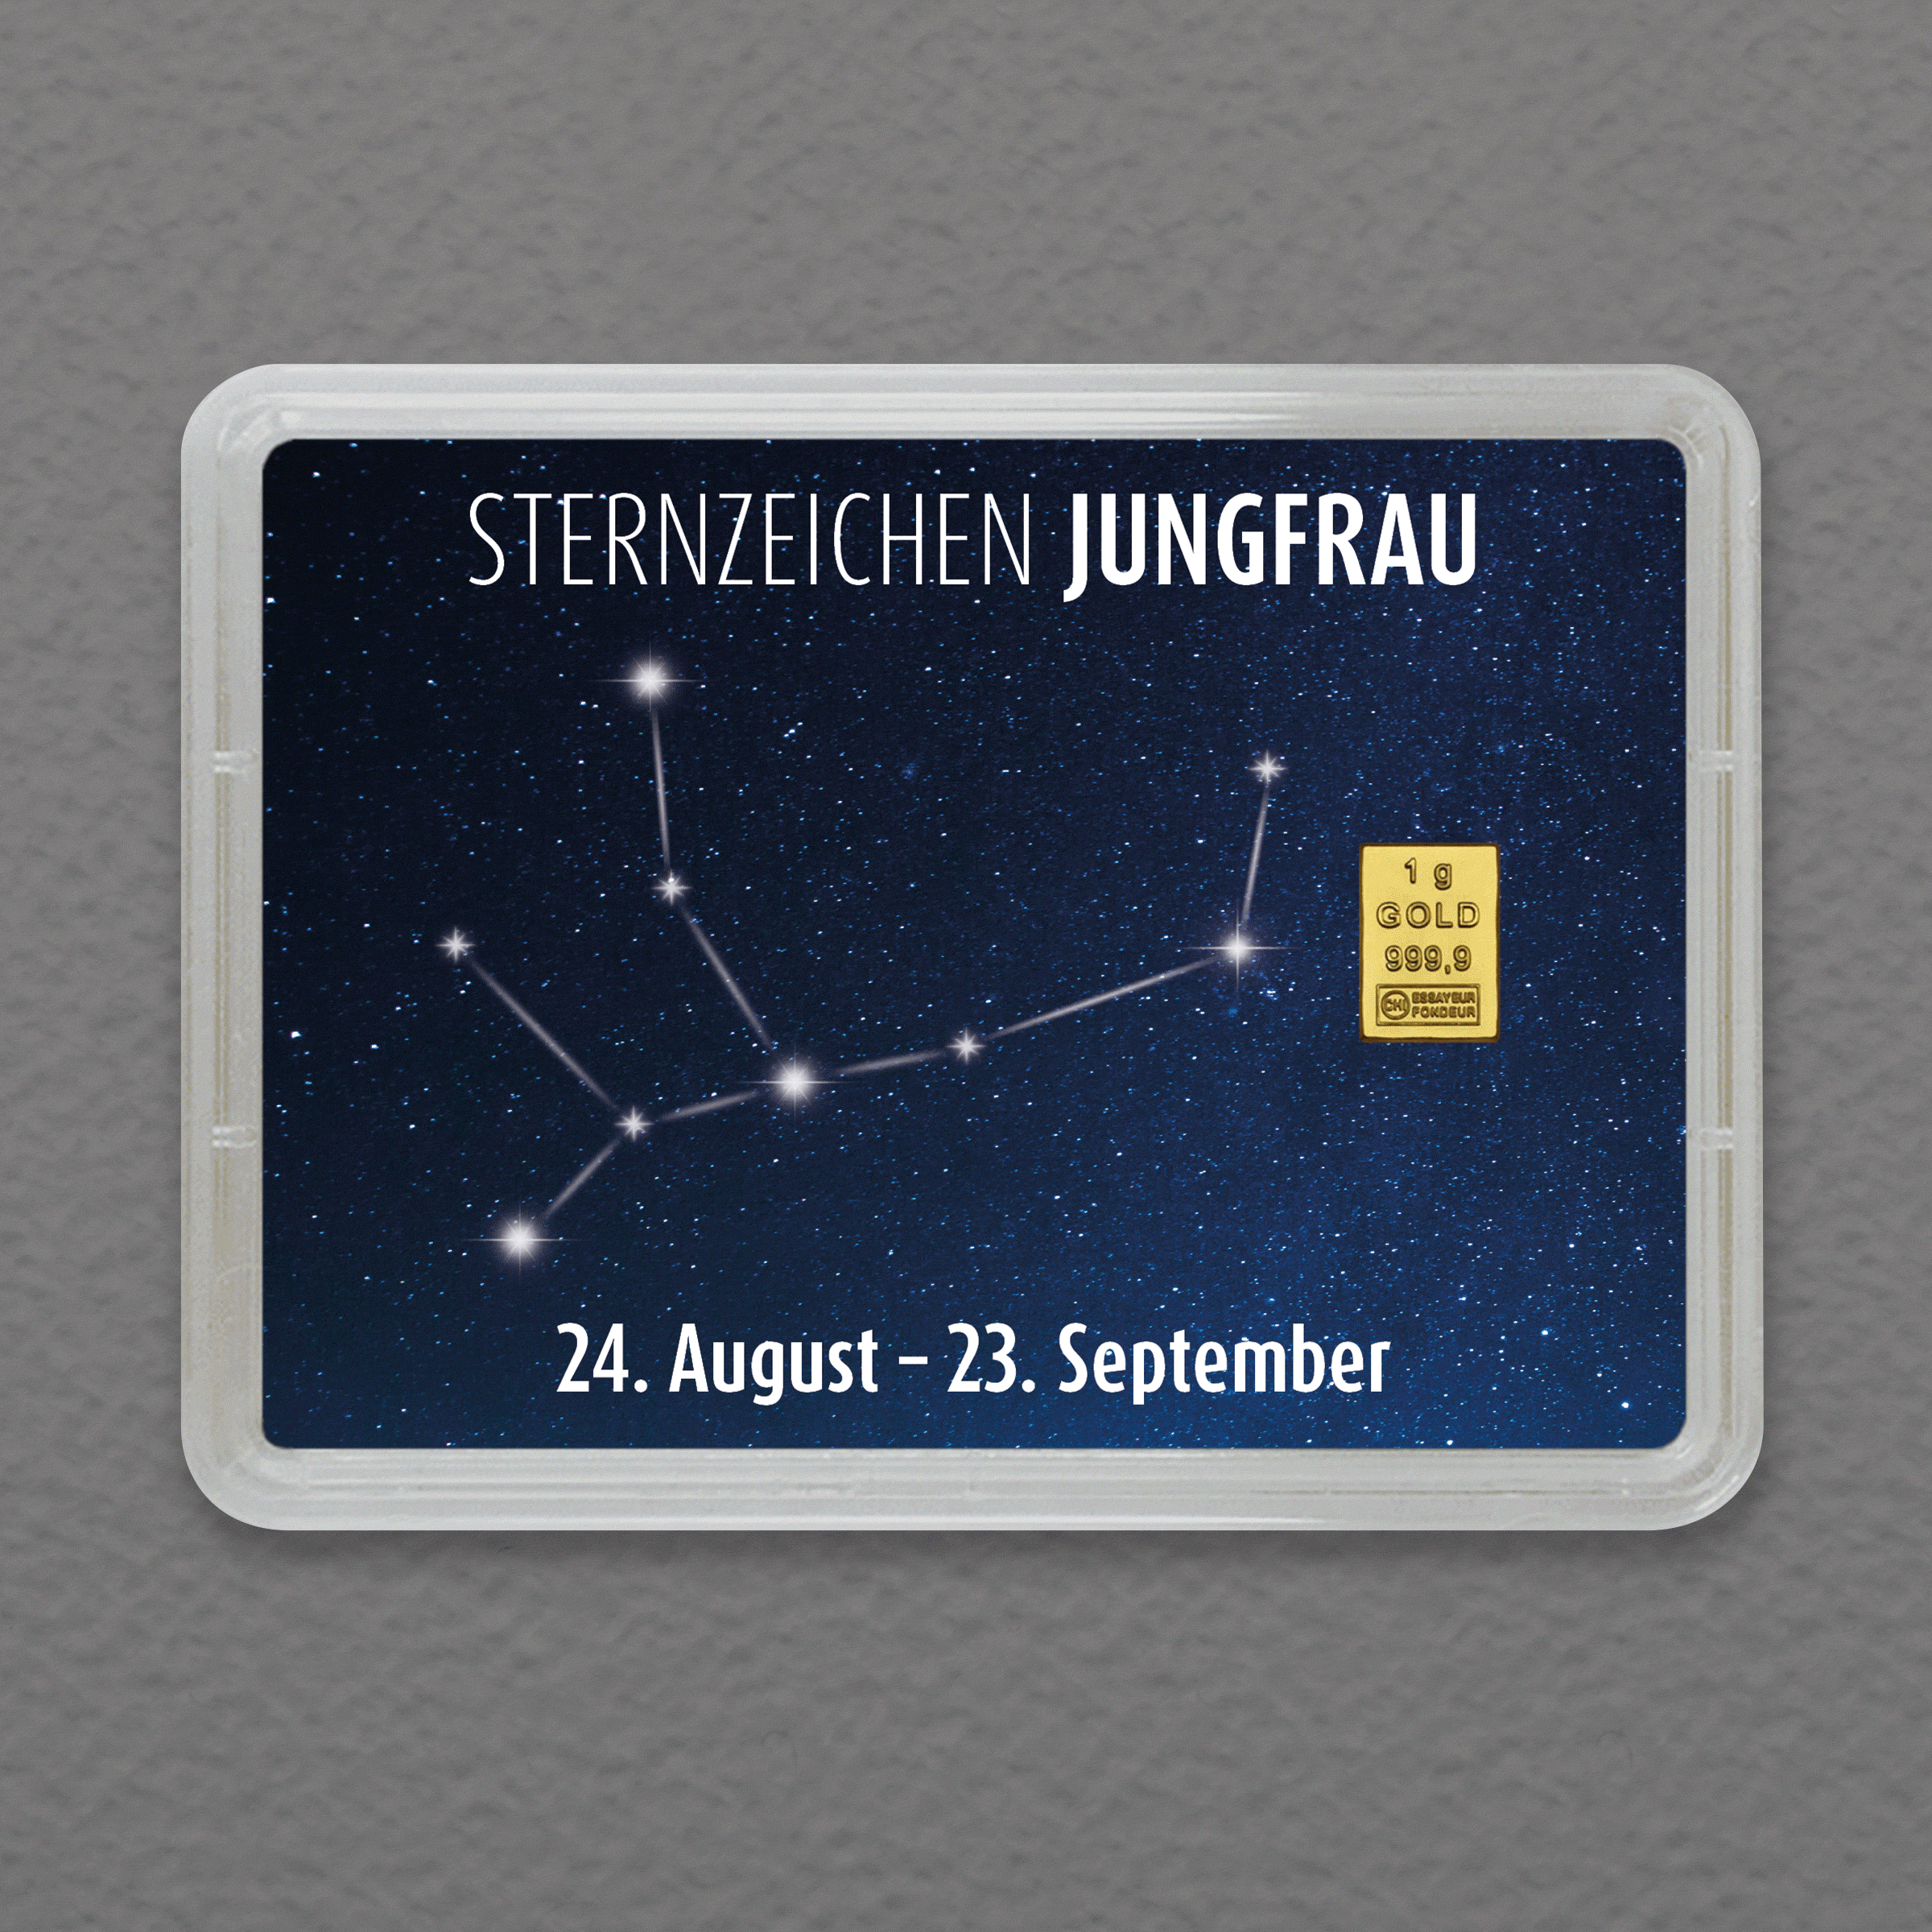 Goldbarren 1g "Sternzeichen: Jungfrau" (Flip) 